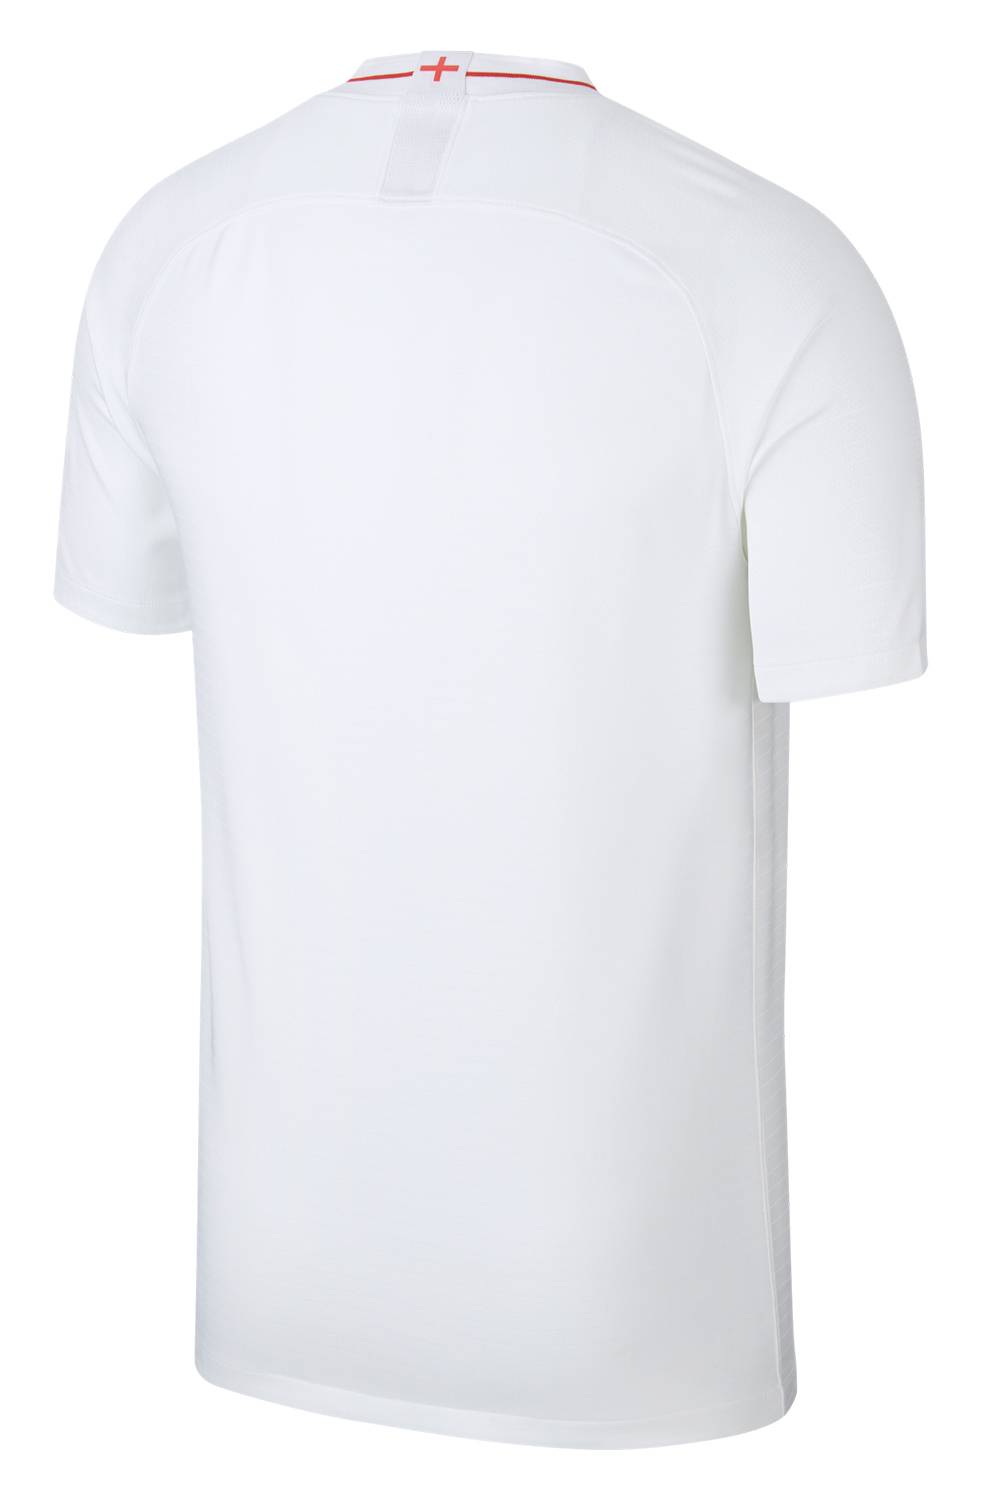 Nike - Camiseta Inglaterra Adulto